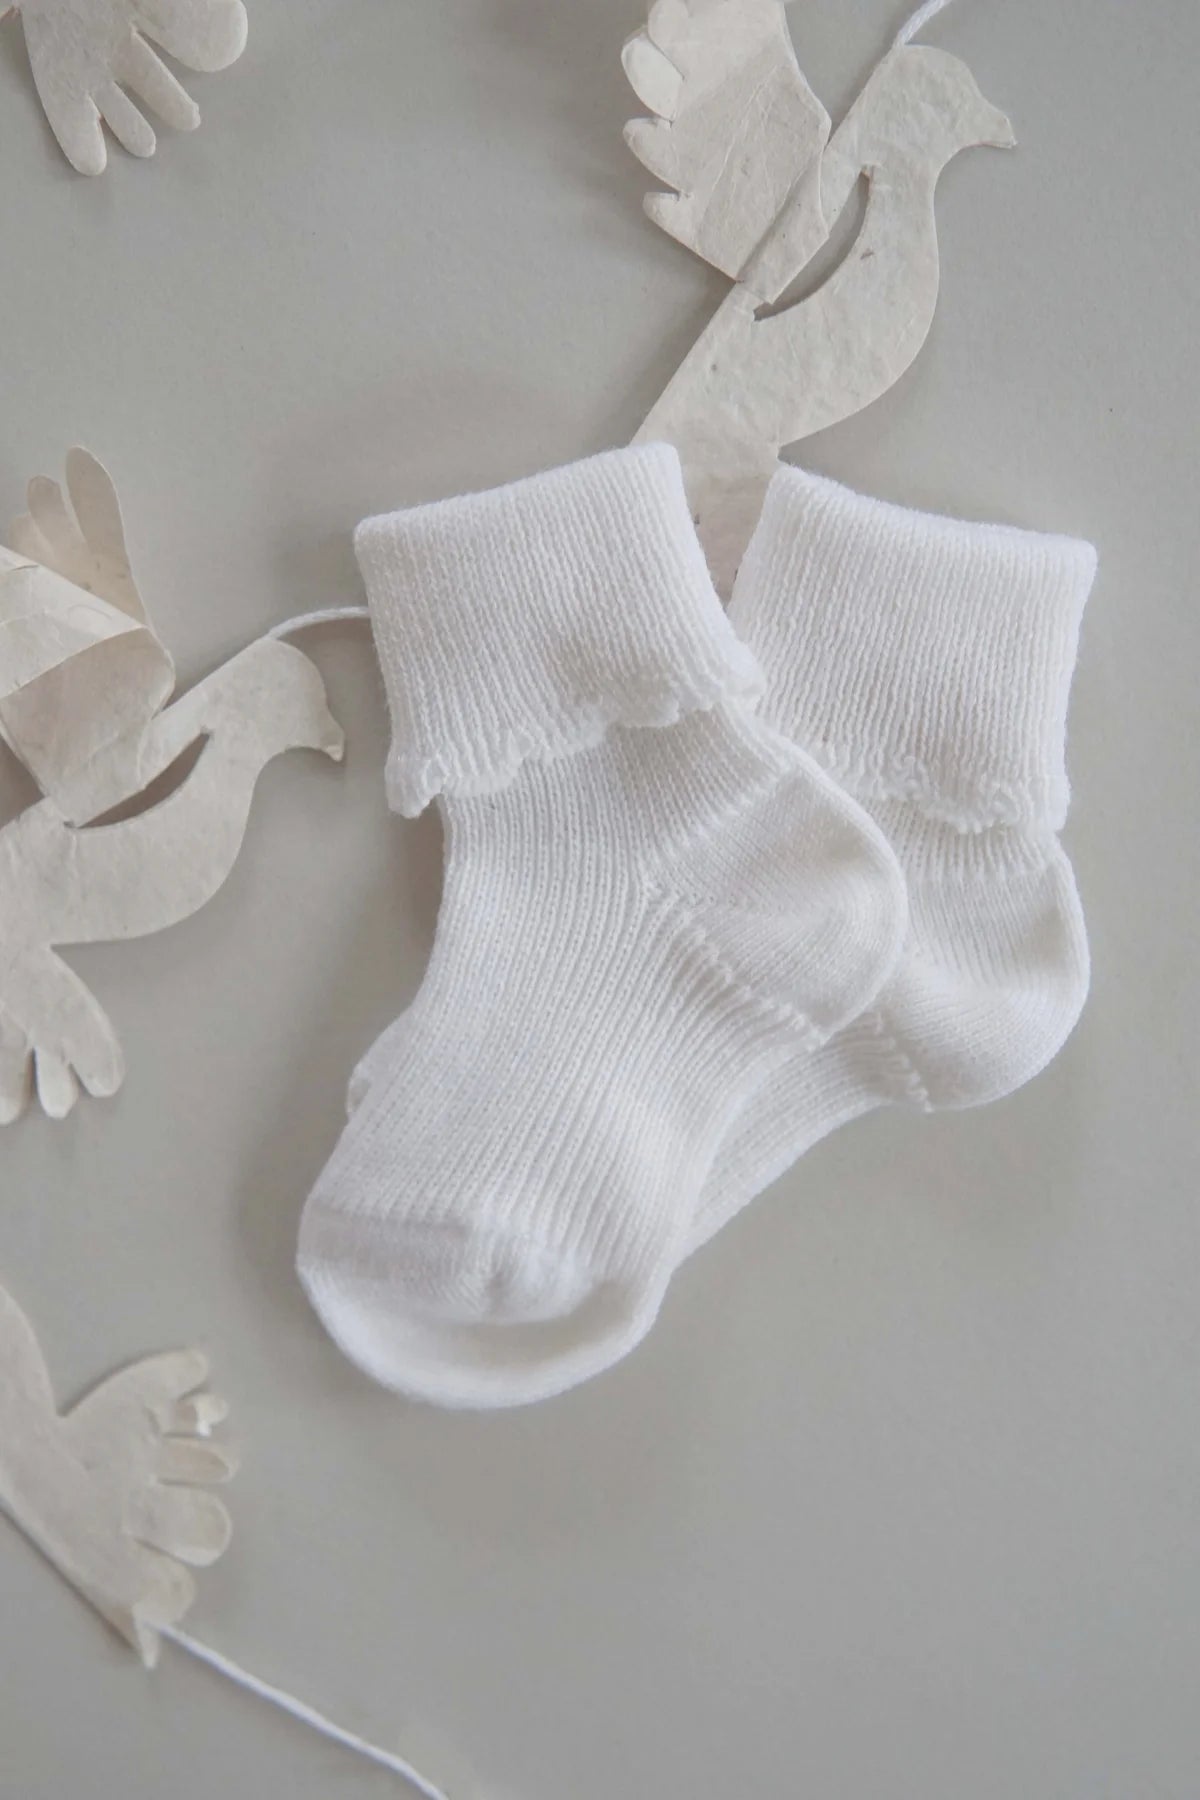 Wool Ruffle Socks, Creamy White, Bobbi Balloon, Organic